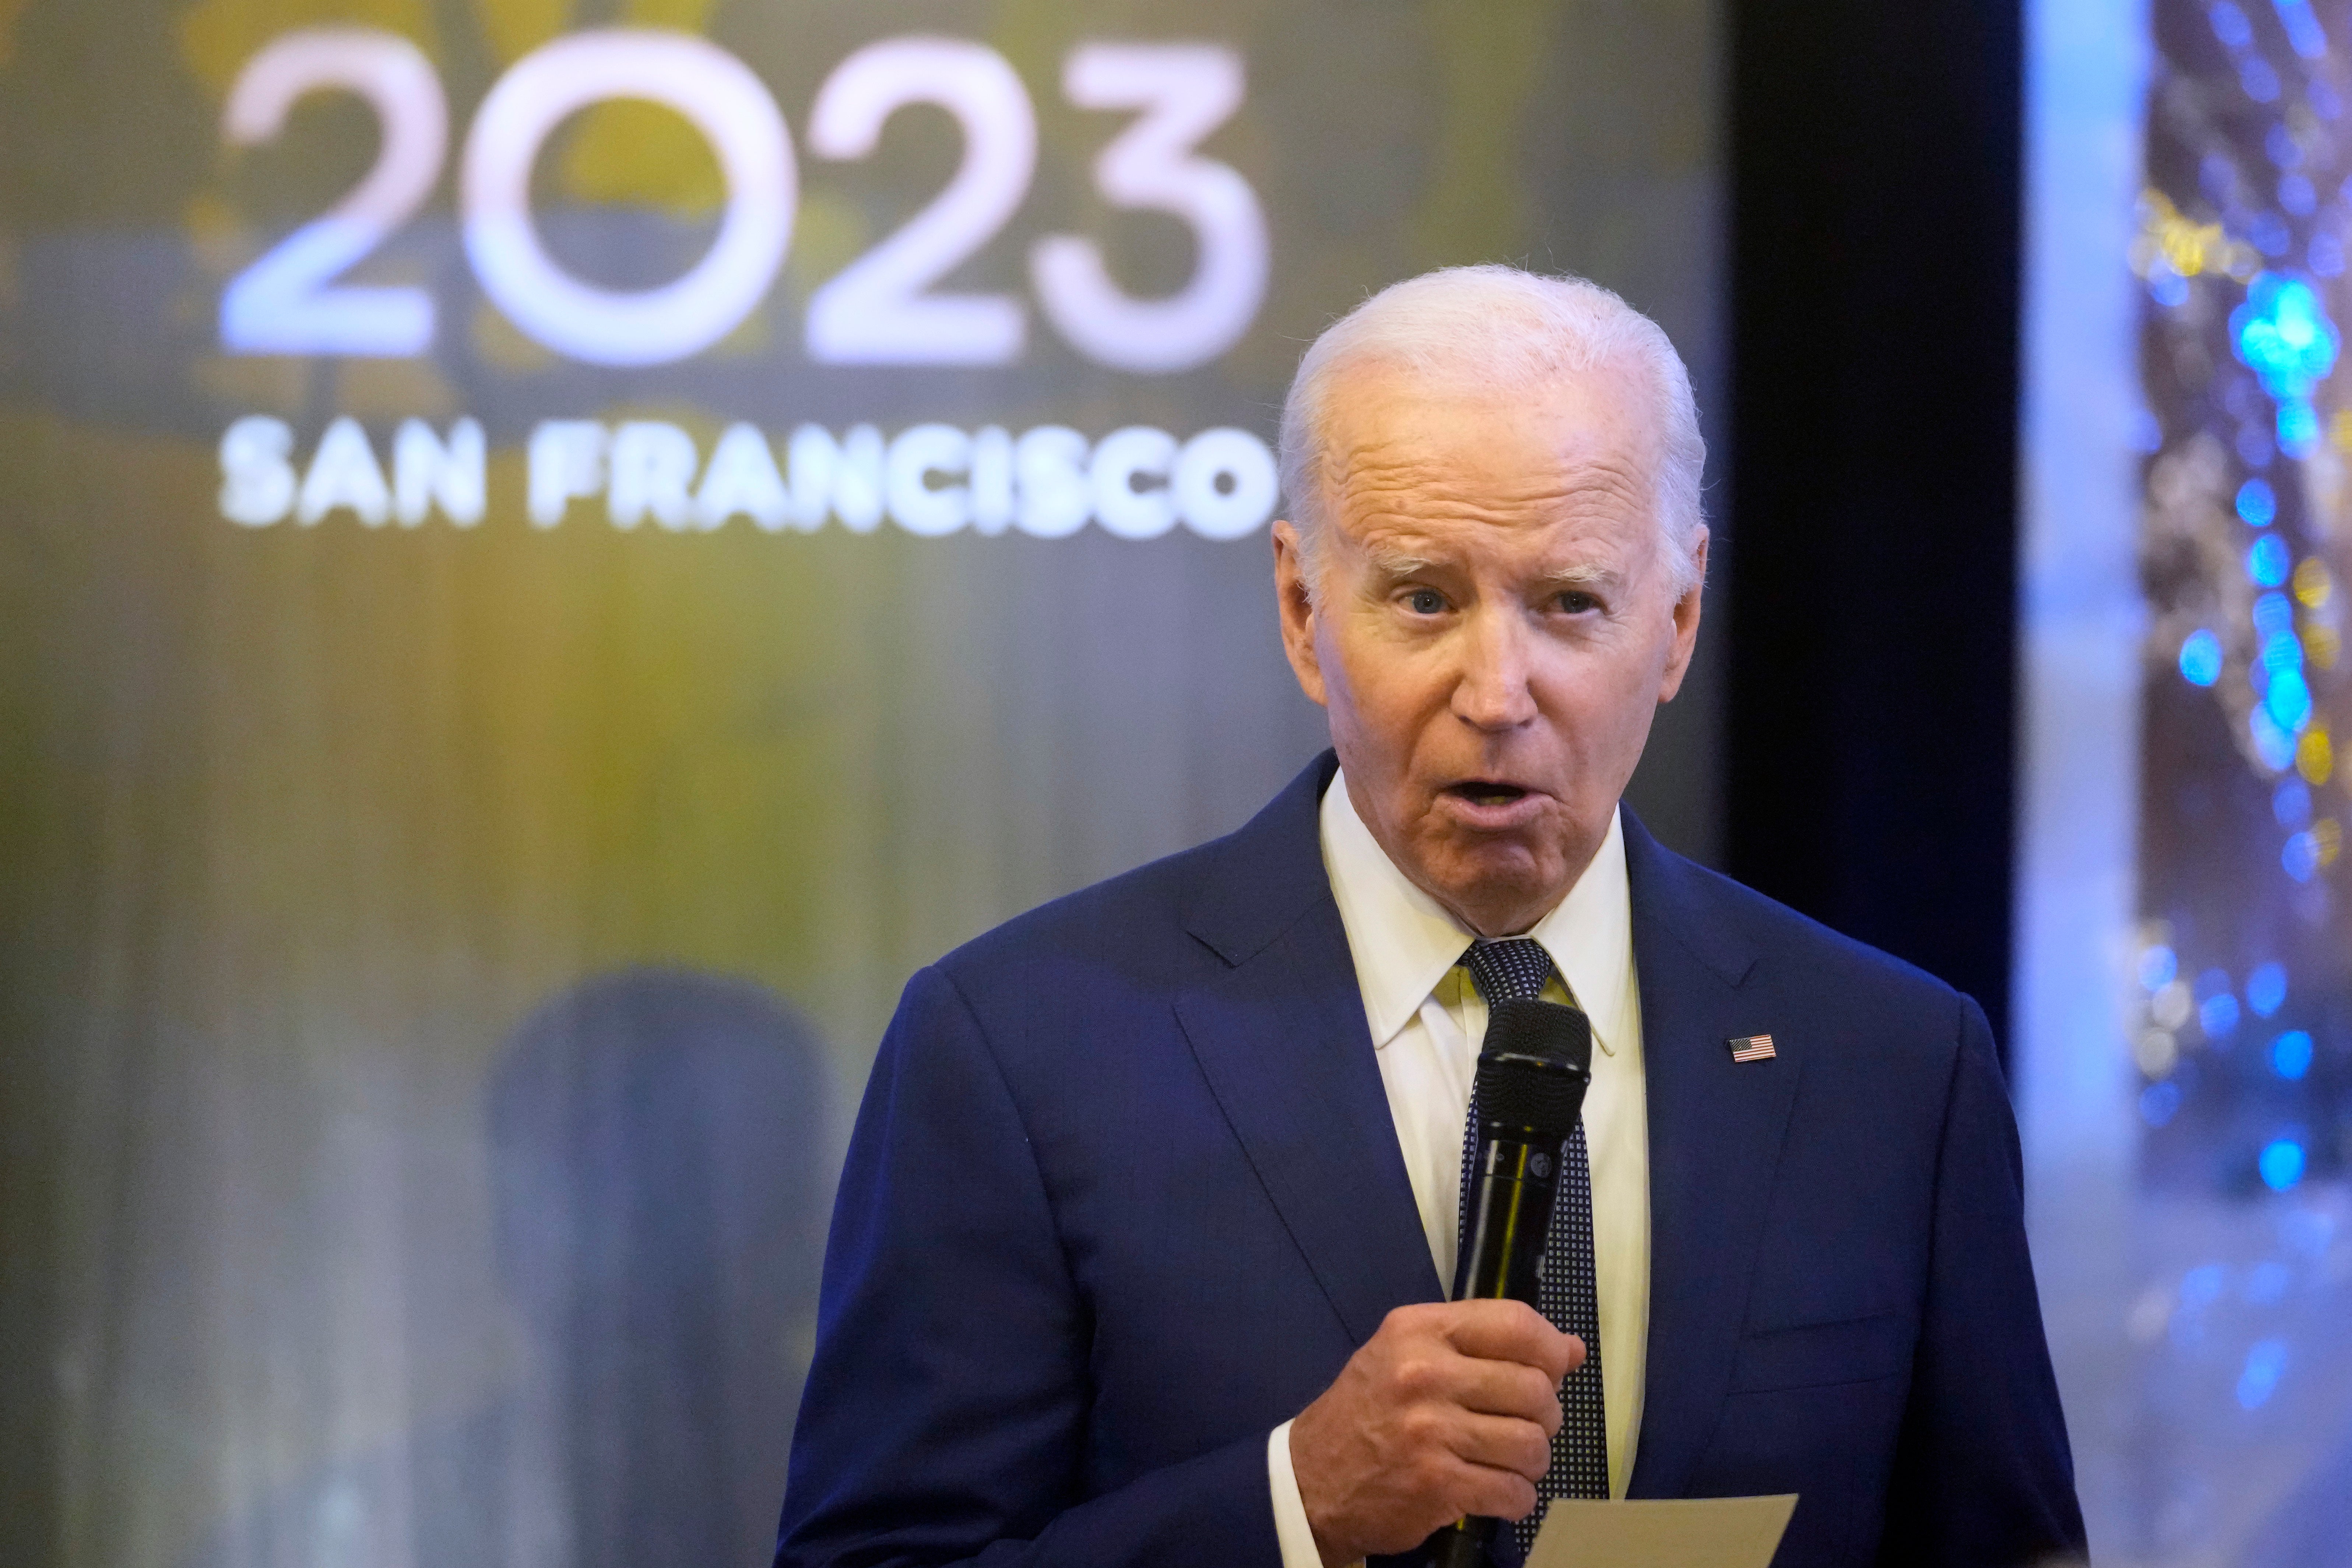 President Joe Biden speaking at the APEC Summit event